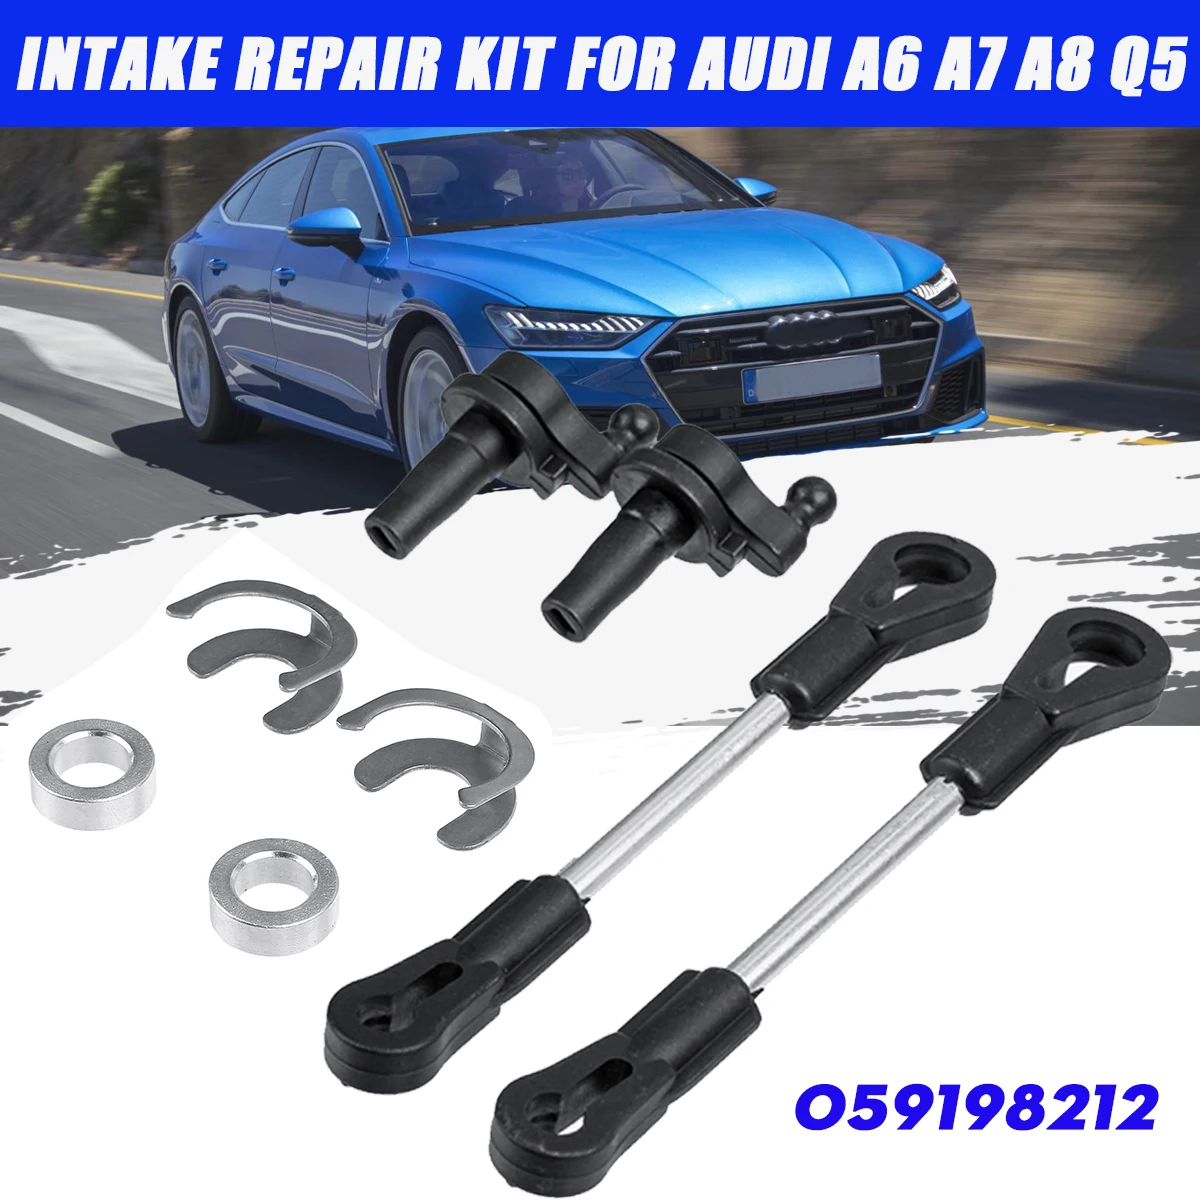 For Audi A4 A5 A6 A7 A8 Q5 Q7 2.7 3.0 TDI 059198212 Intake